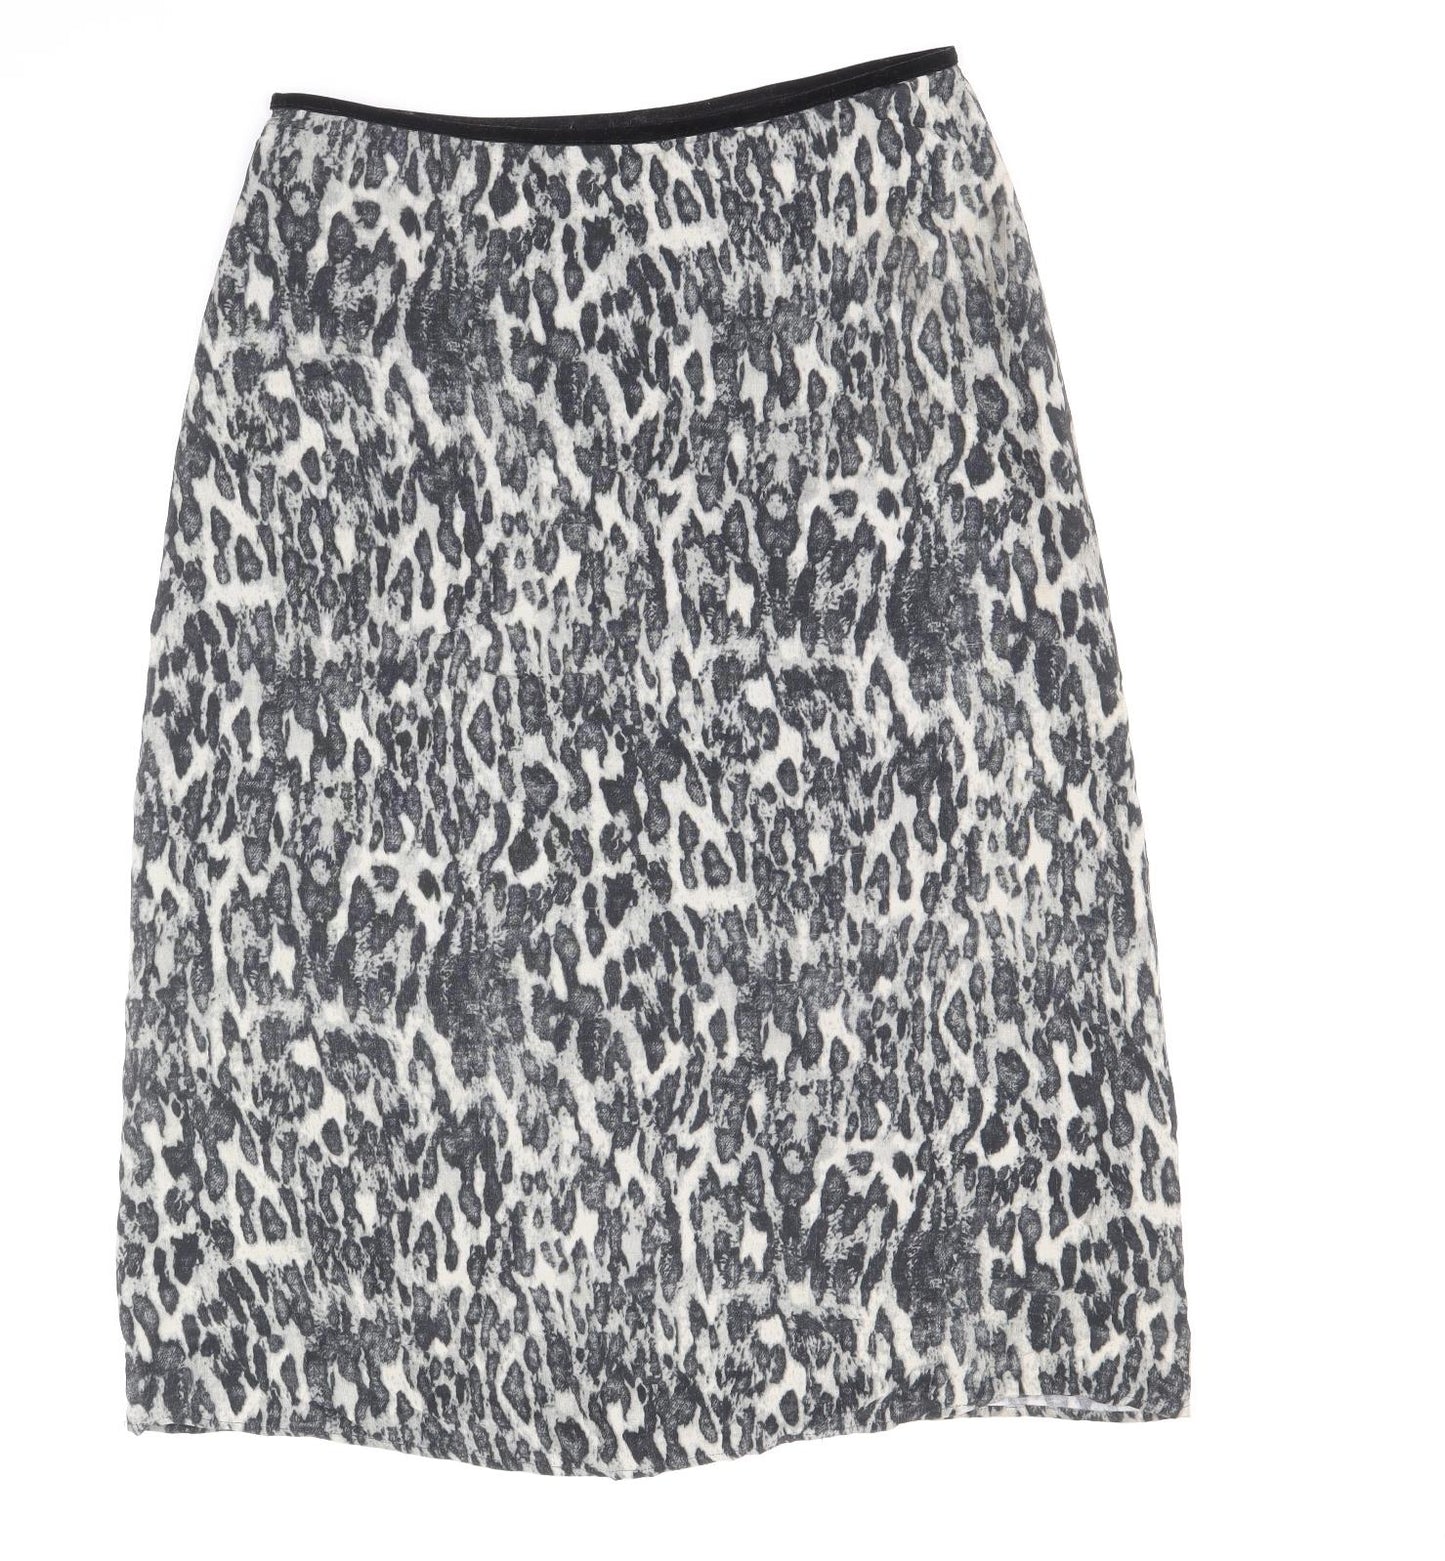 YAYA Womens Grey Animal Print Polyester Swing Skirt Size 14 Zip - Leopard Pattern